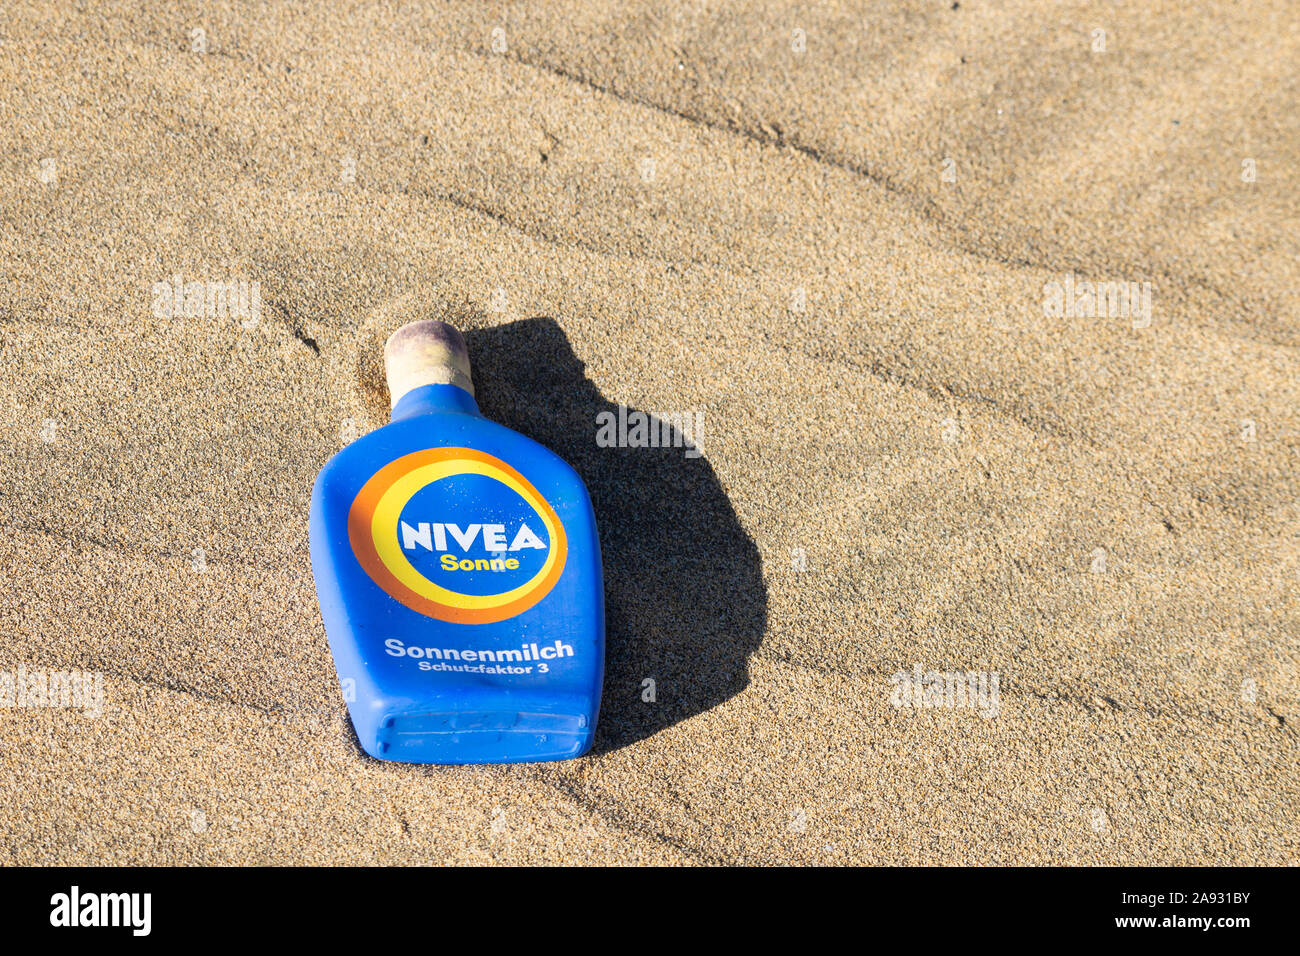 Discarded plastic Nivea suncream bottle on beach in Spain. Stock Photo